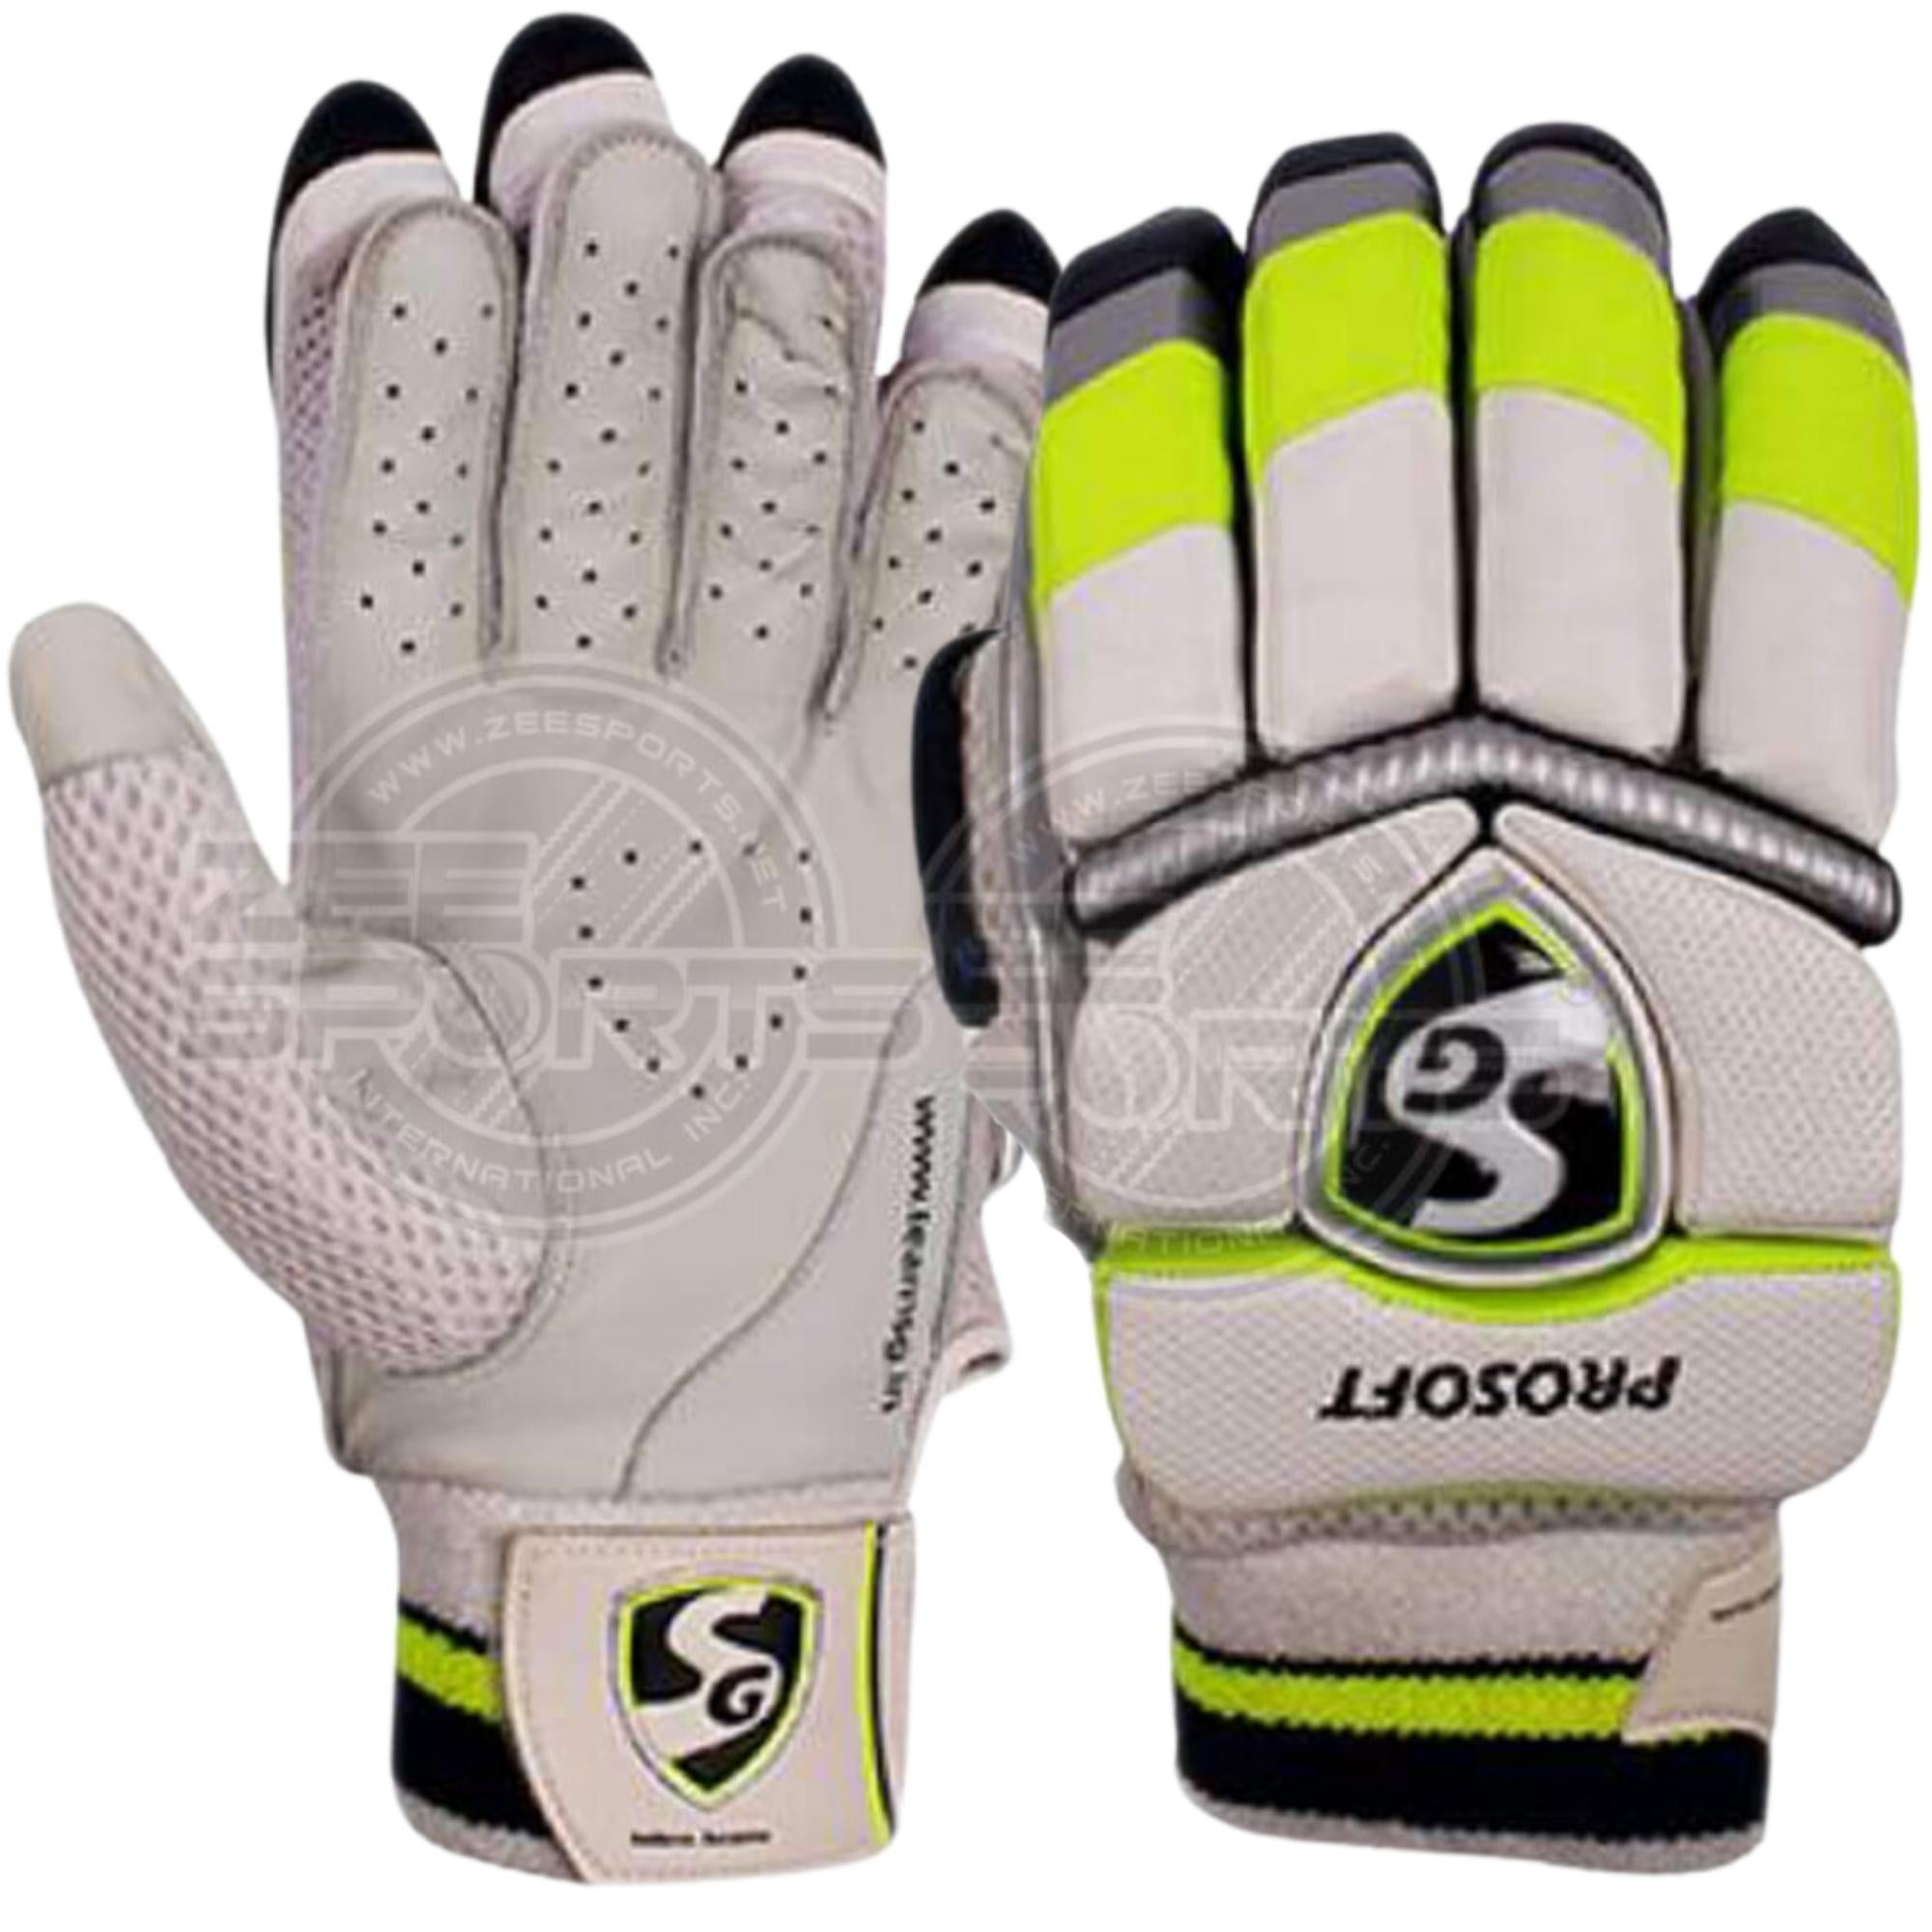 SG Batting Gloves Prosoft